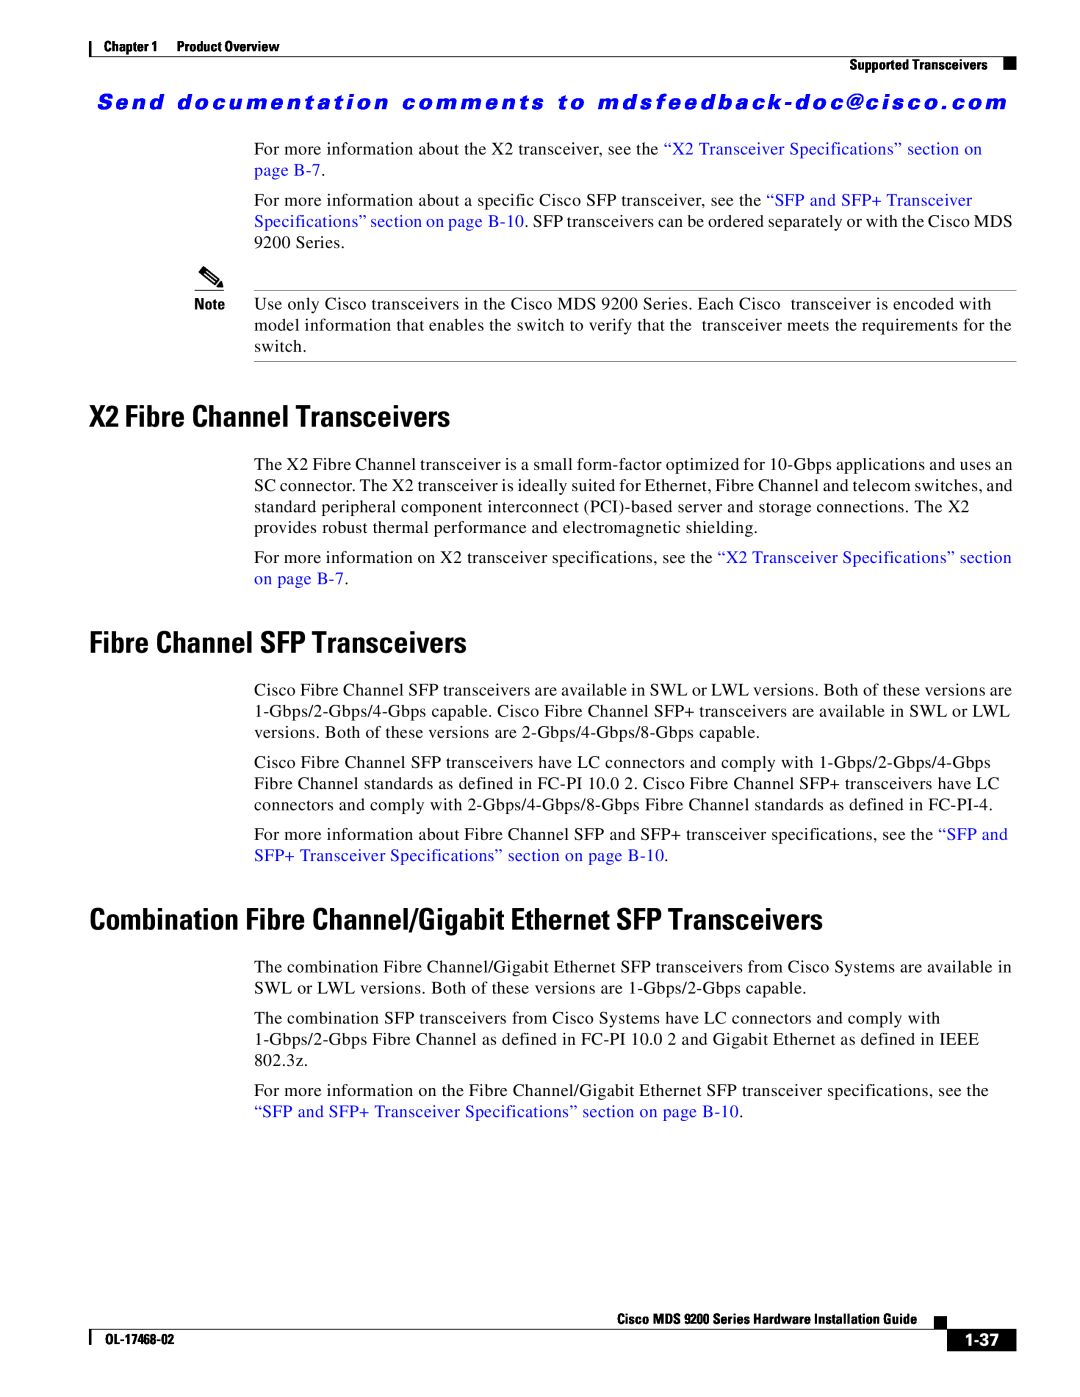 Cisco Systems MDS 9200 Series manual X2 Fibre Channel Transceivers, Fibre Channel SFP Transceivers, 1-37 